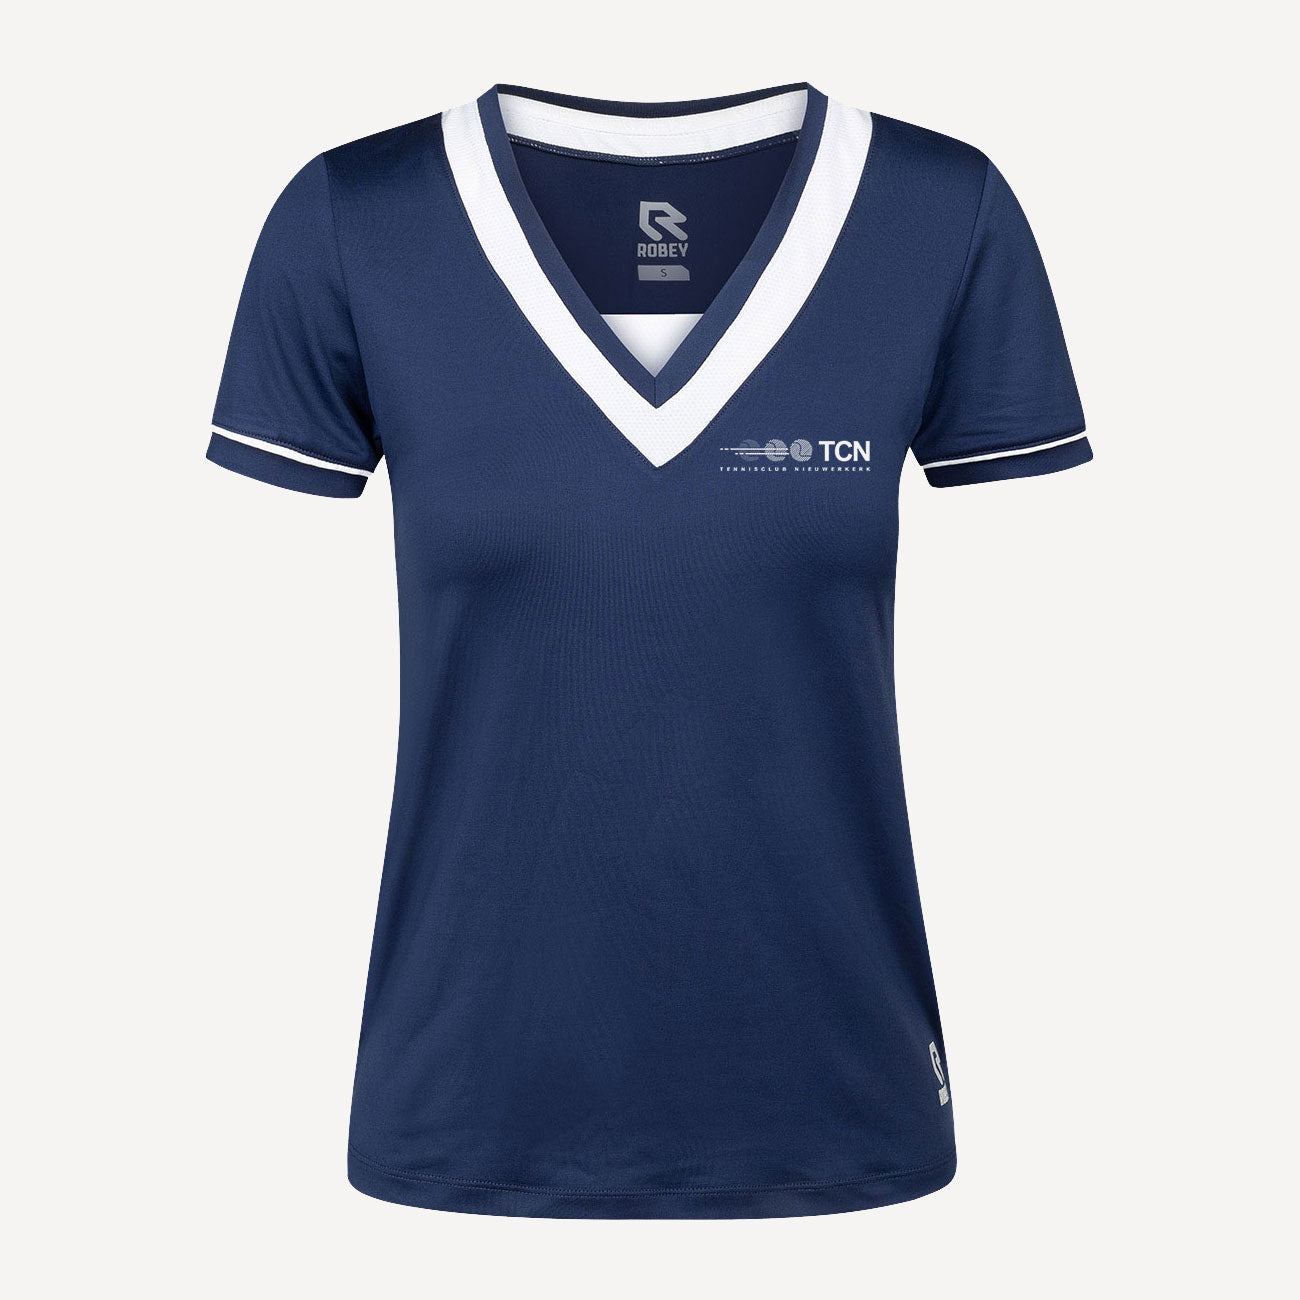 Robey Match Women's Tennis Shirt - TC Nieuwerkerk Dark Blue (1)